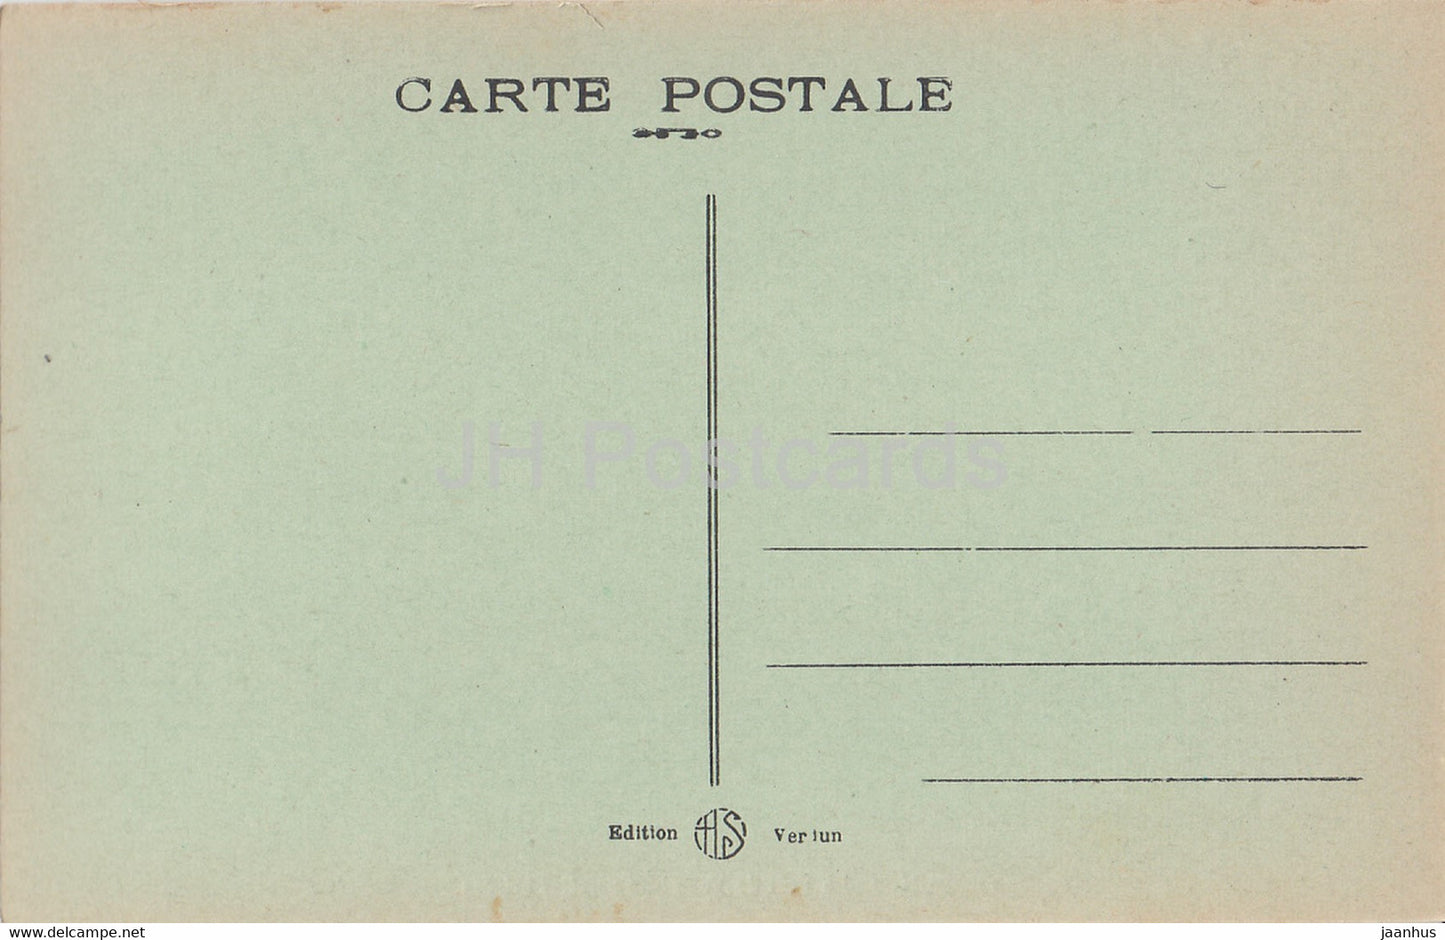 Verdun - Le Fort de Vaux - Tourelles brisees - Militär - Erster Weltkrieg - alte Postkarte - Frankreich - unbenutzt